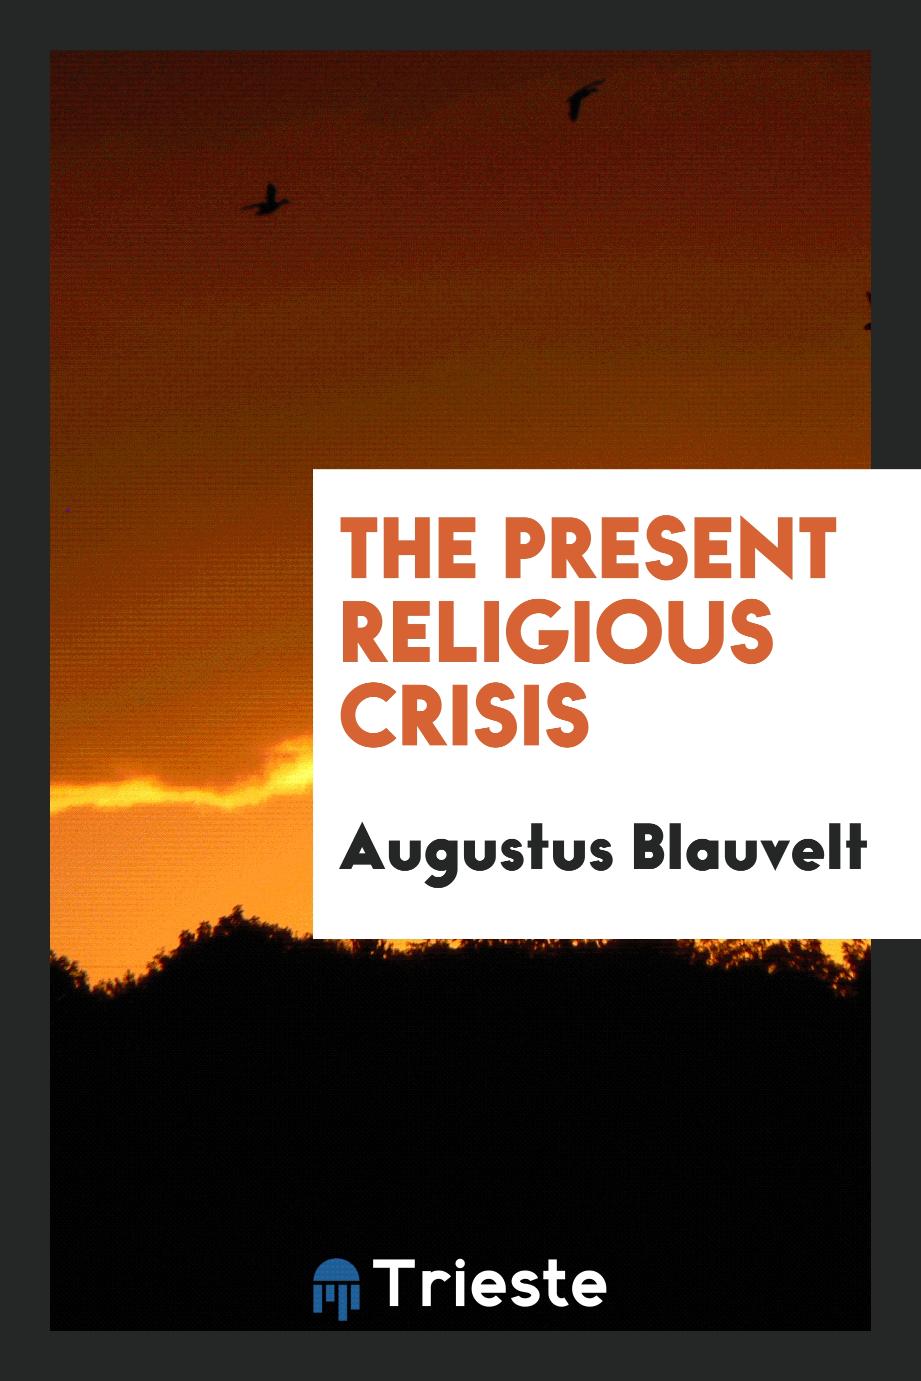 The present religious crisis